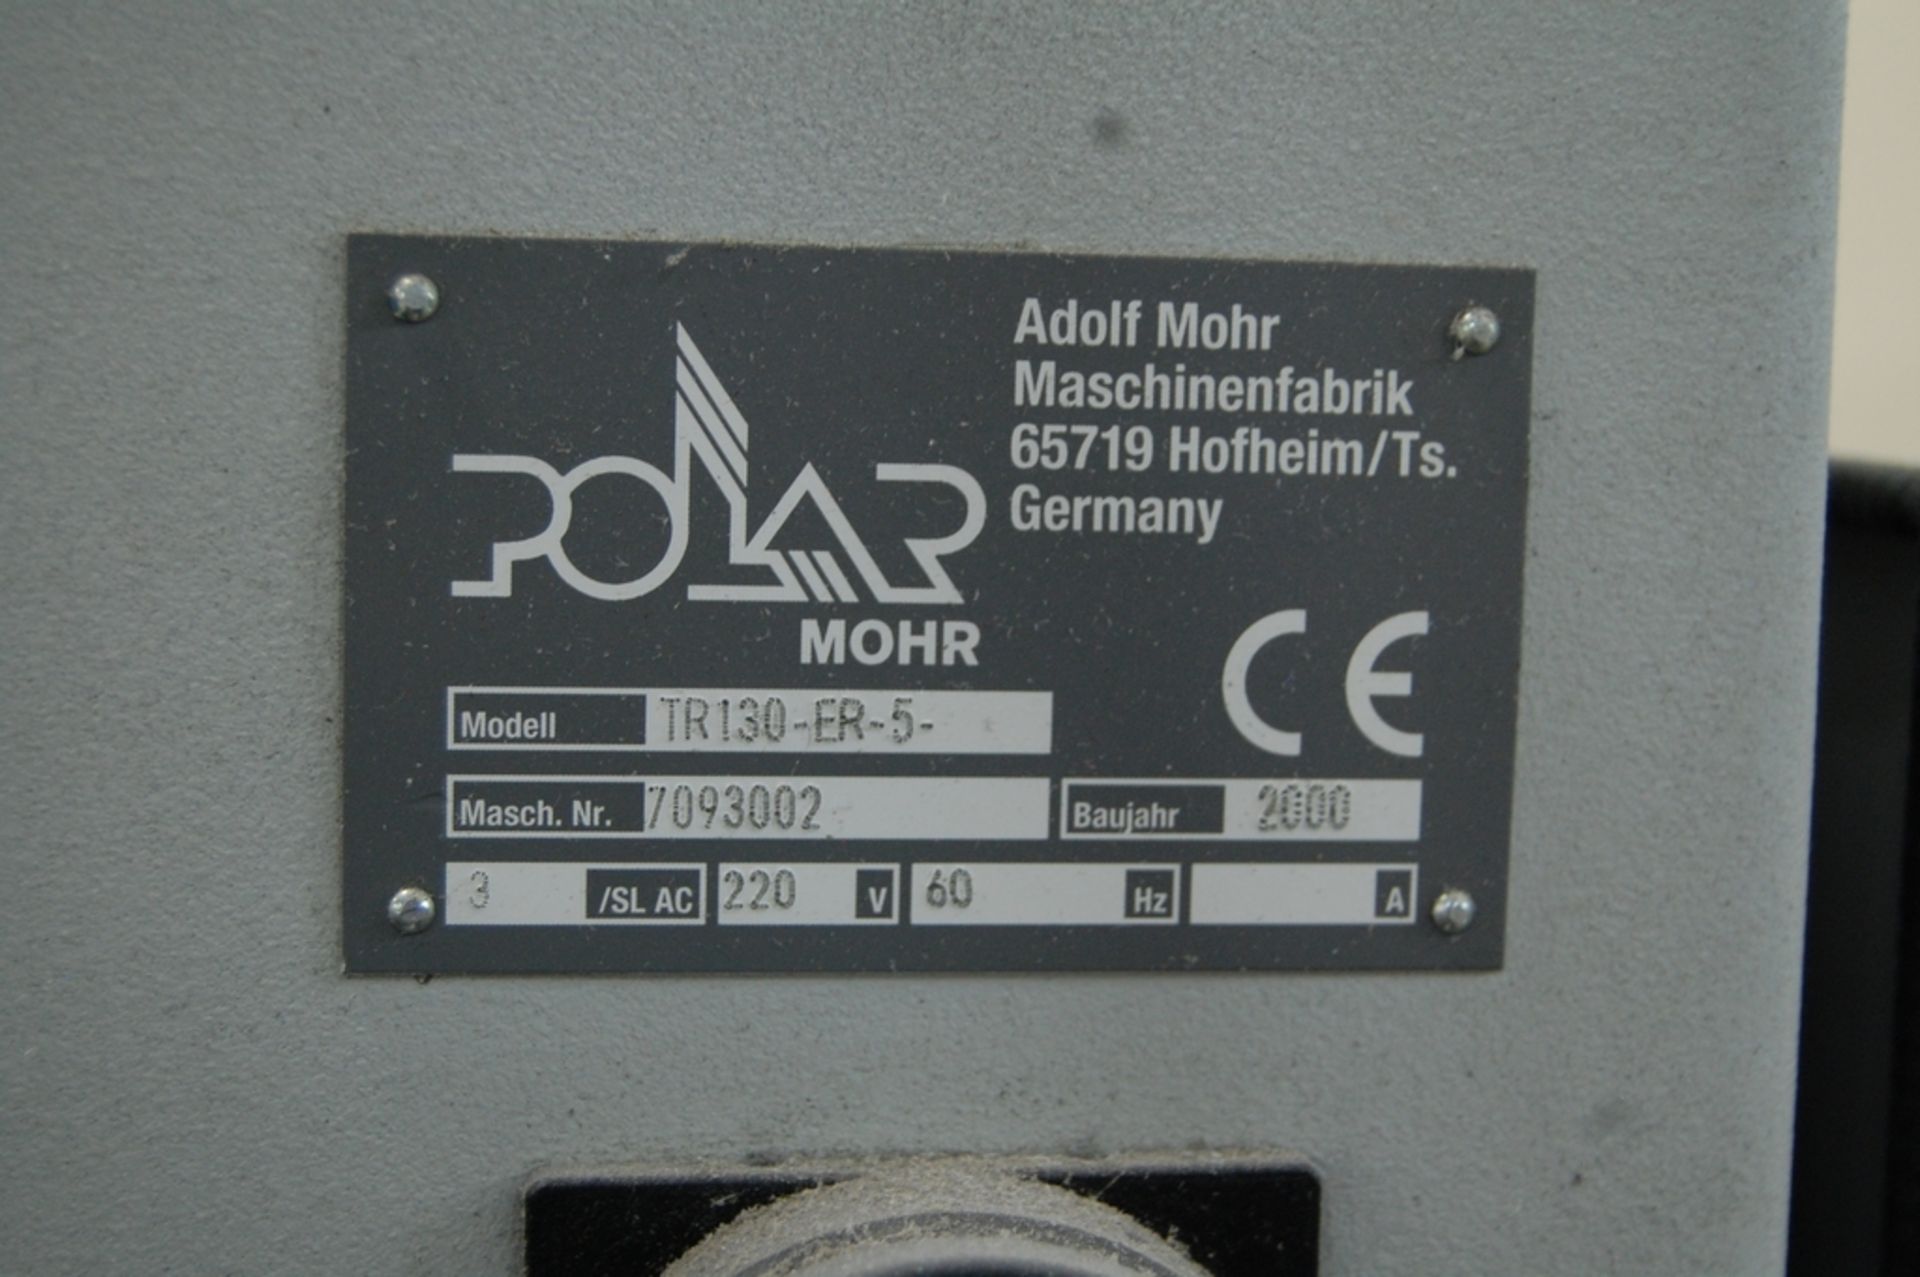 2000 Polar Mohr Model 115ED 45" Paper Cutting Machine - Image 18 of 23